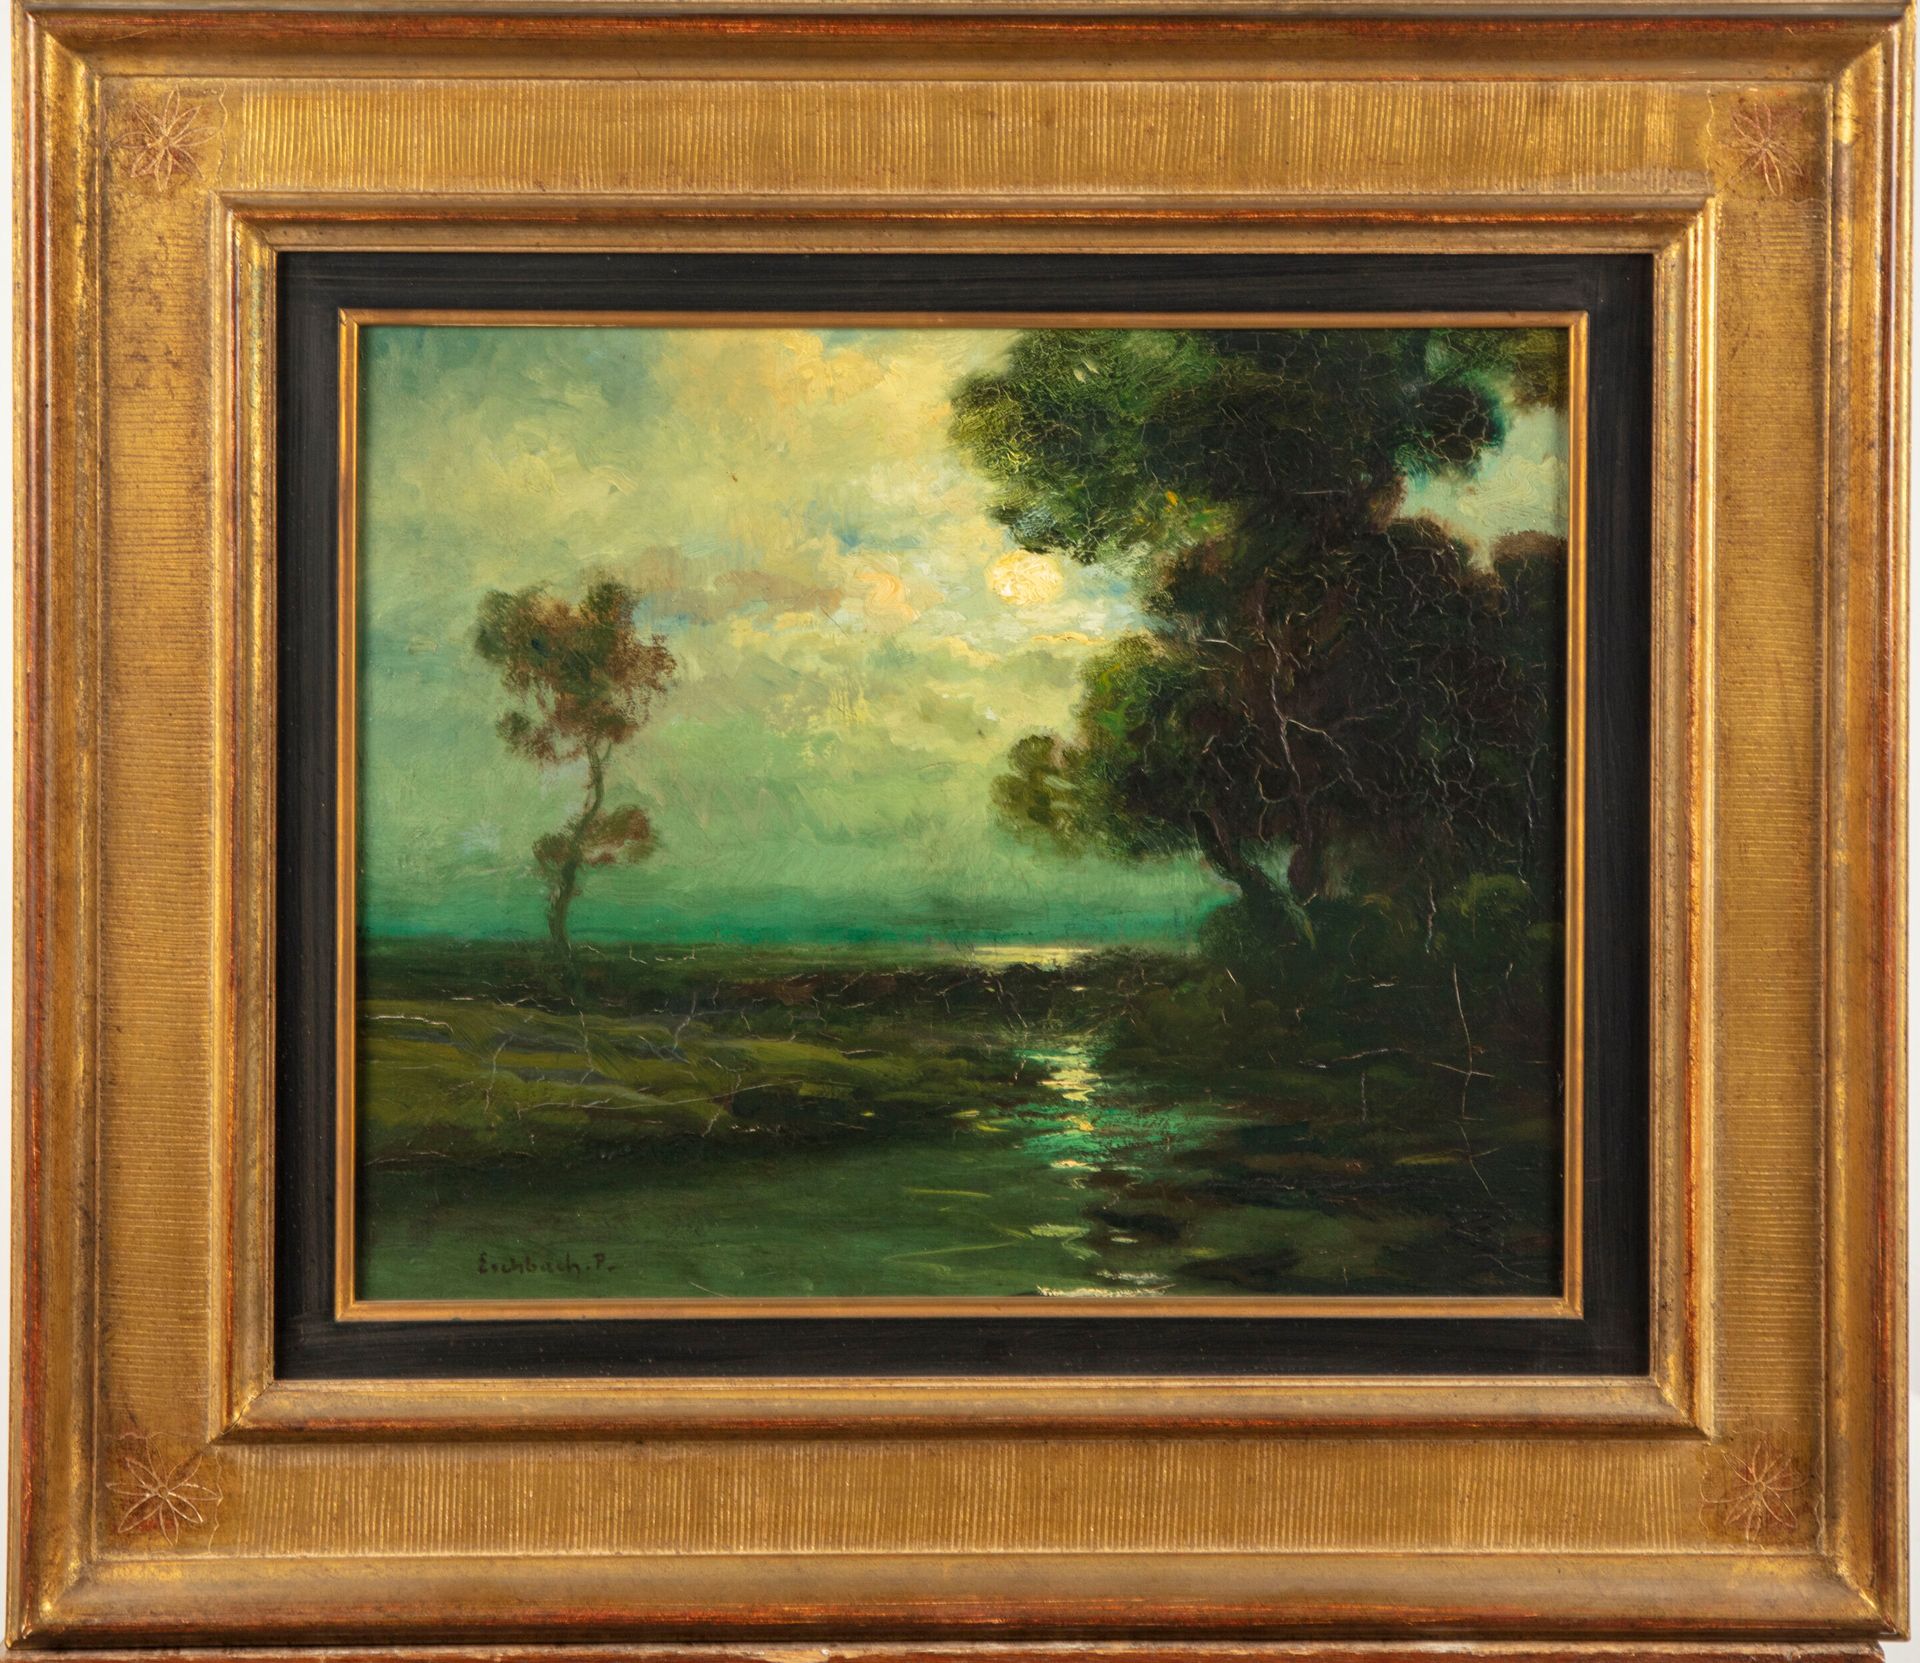 Null 保罗-艾斯巴赫 (1881-1961)

月光下的乡村风景

布面油画，左下角有签名

33 x 41厘米

裂缝